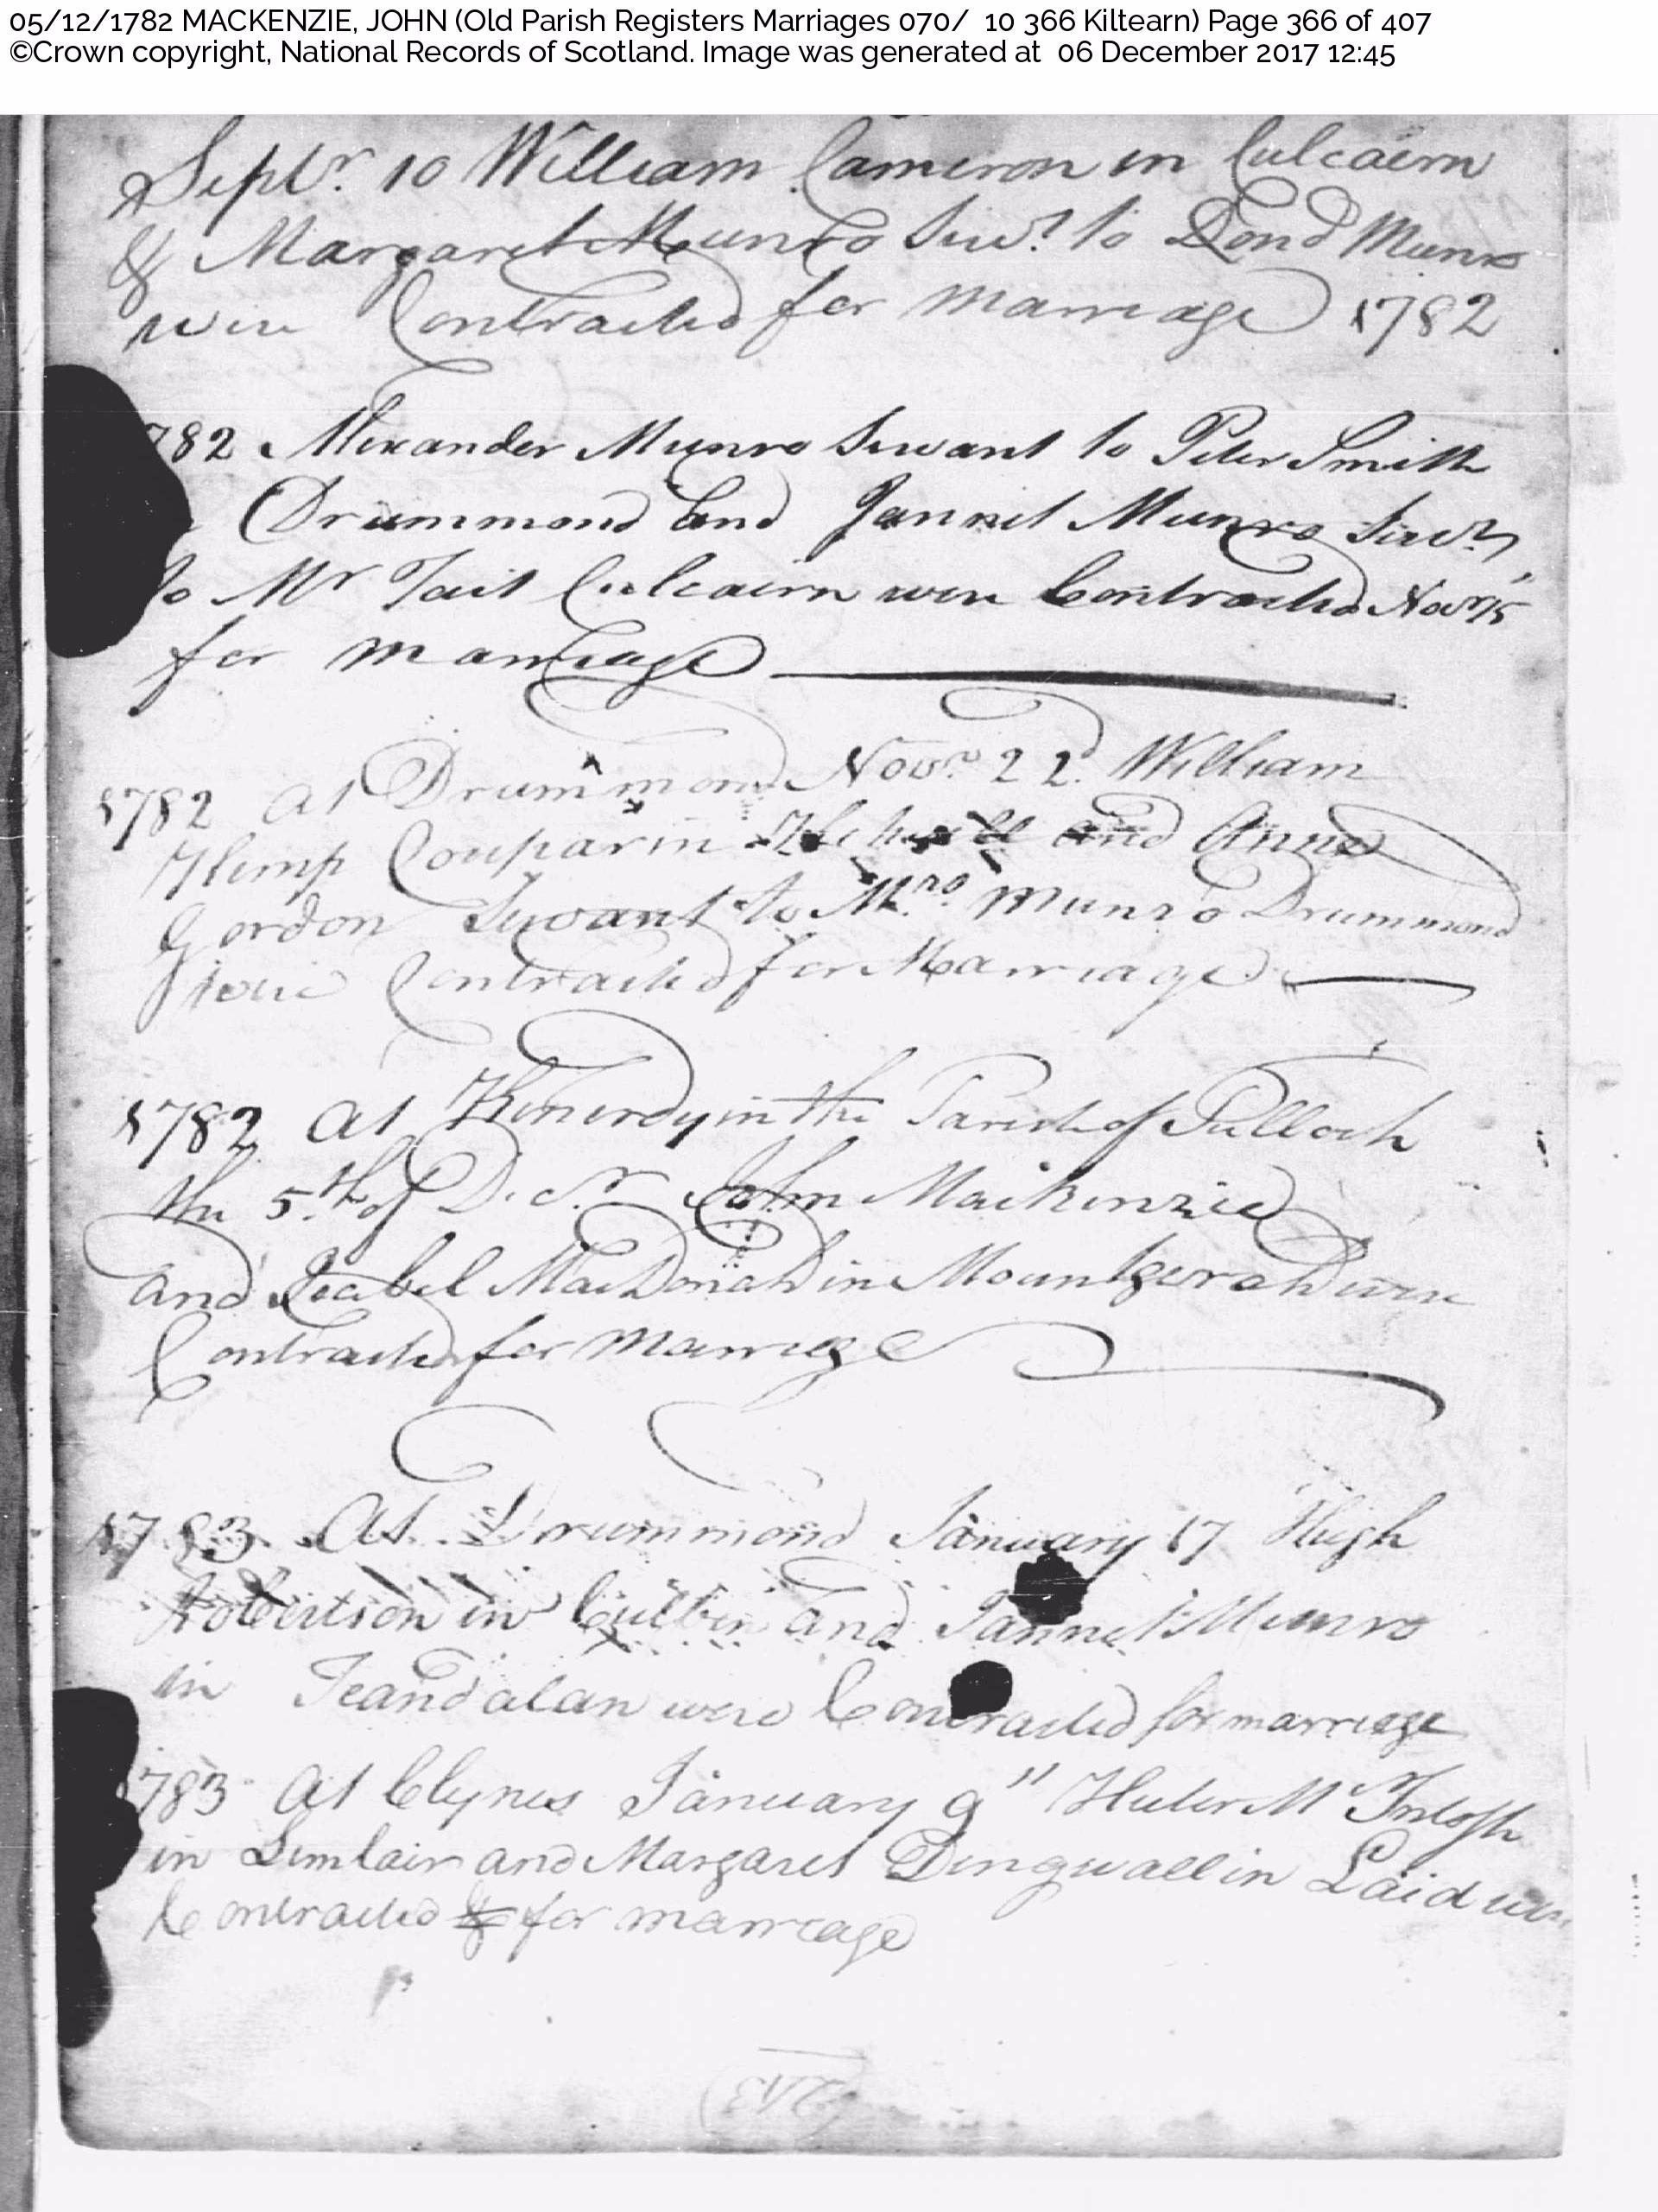 Marrage Register Entry 1782 John MackKENZIE & Isabel MacDONALD @Kiltearn, December 5, 1782, Linked To: <a href='i1055.html' >John McKenzie</a>